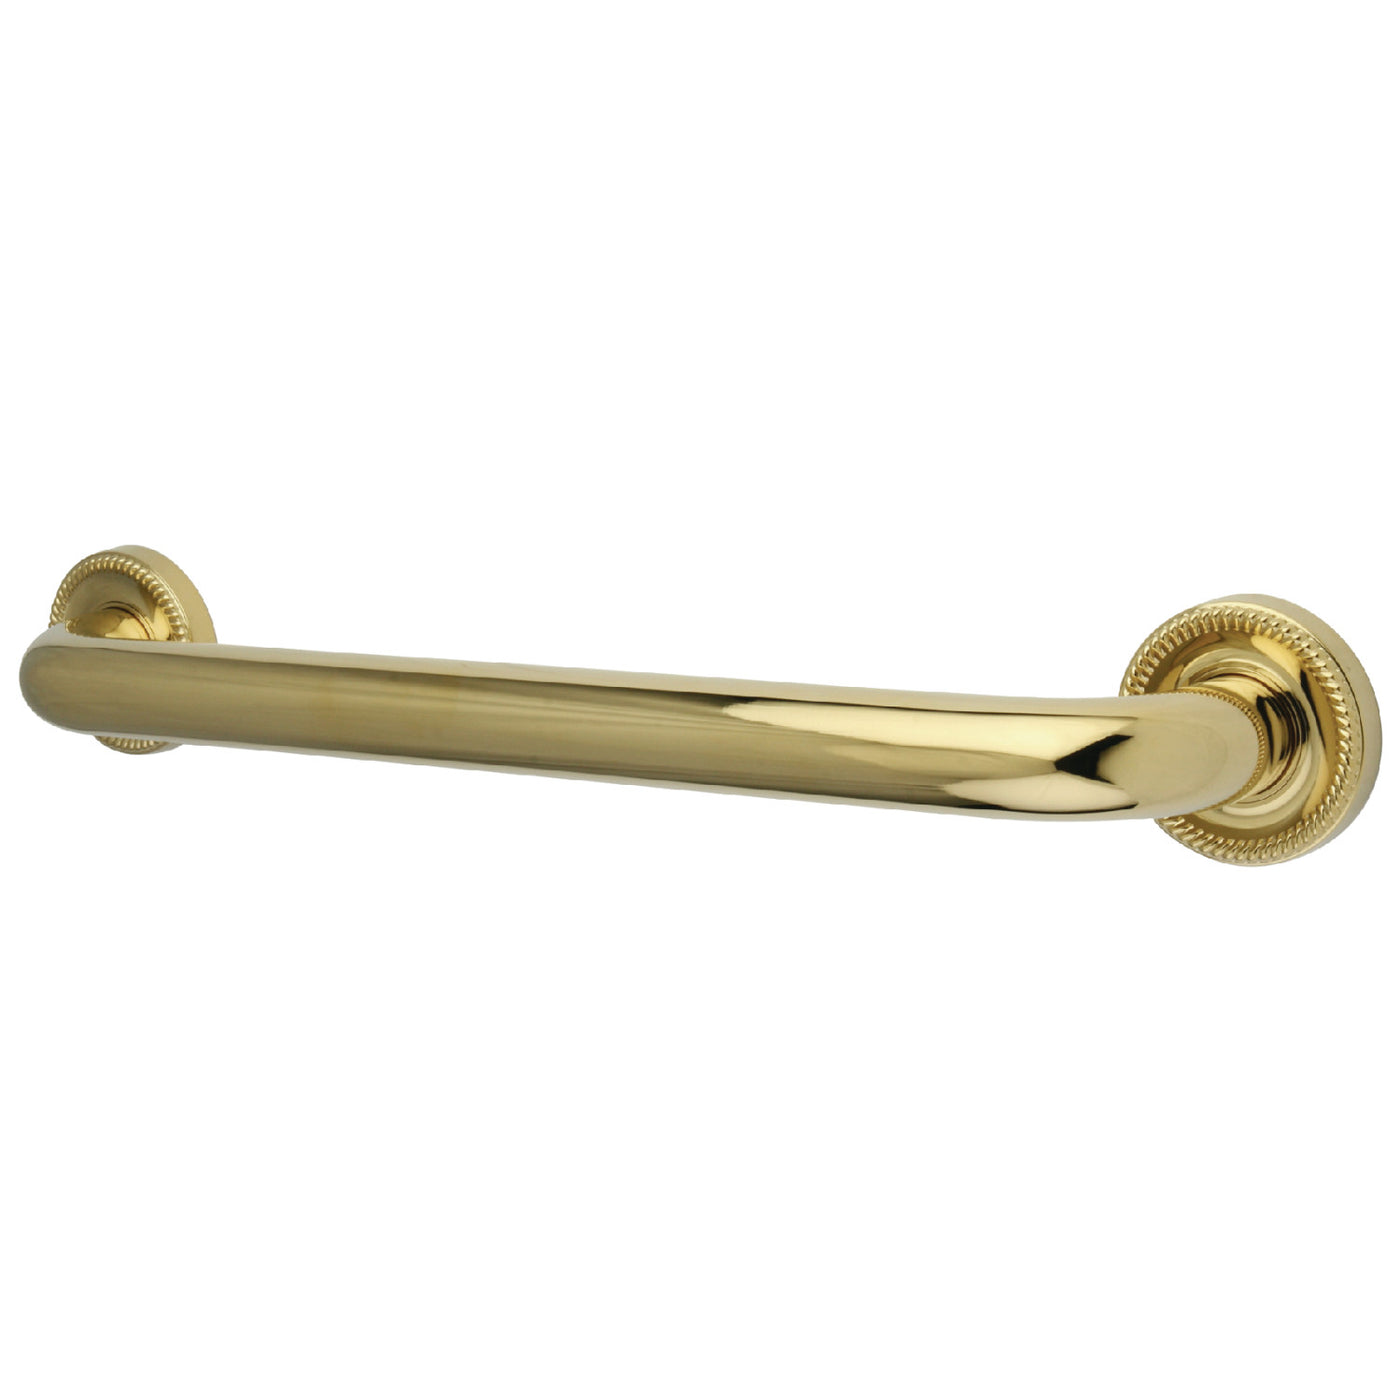 Elements of Design EDR914182 18-Inch x 1-1/4-Inch O.D Grab Bar, Polished Brass